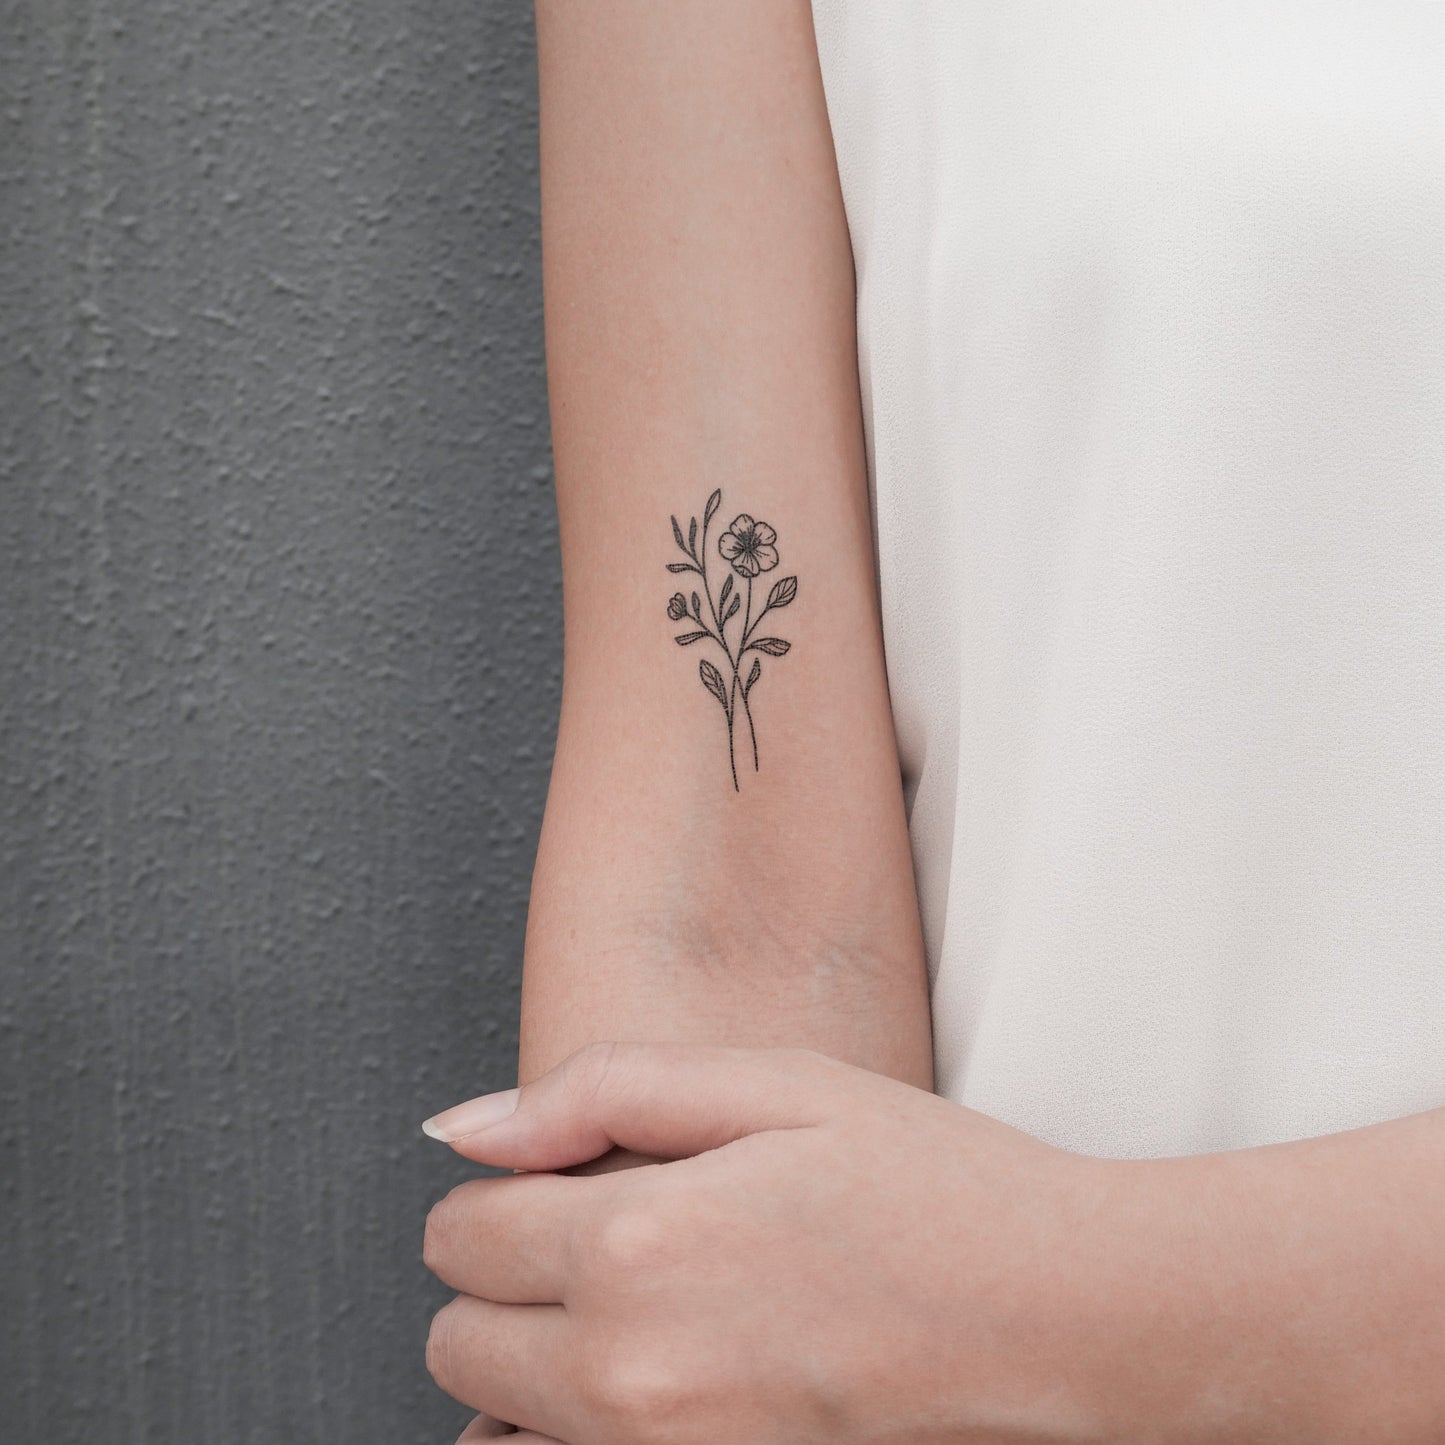 Spring Bouquet | Temporary Tattoo Sheet